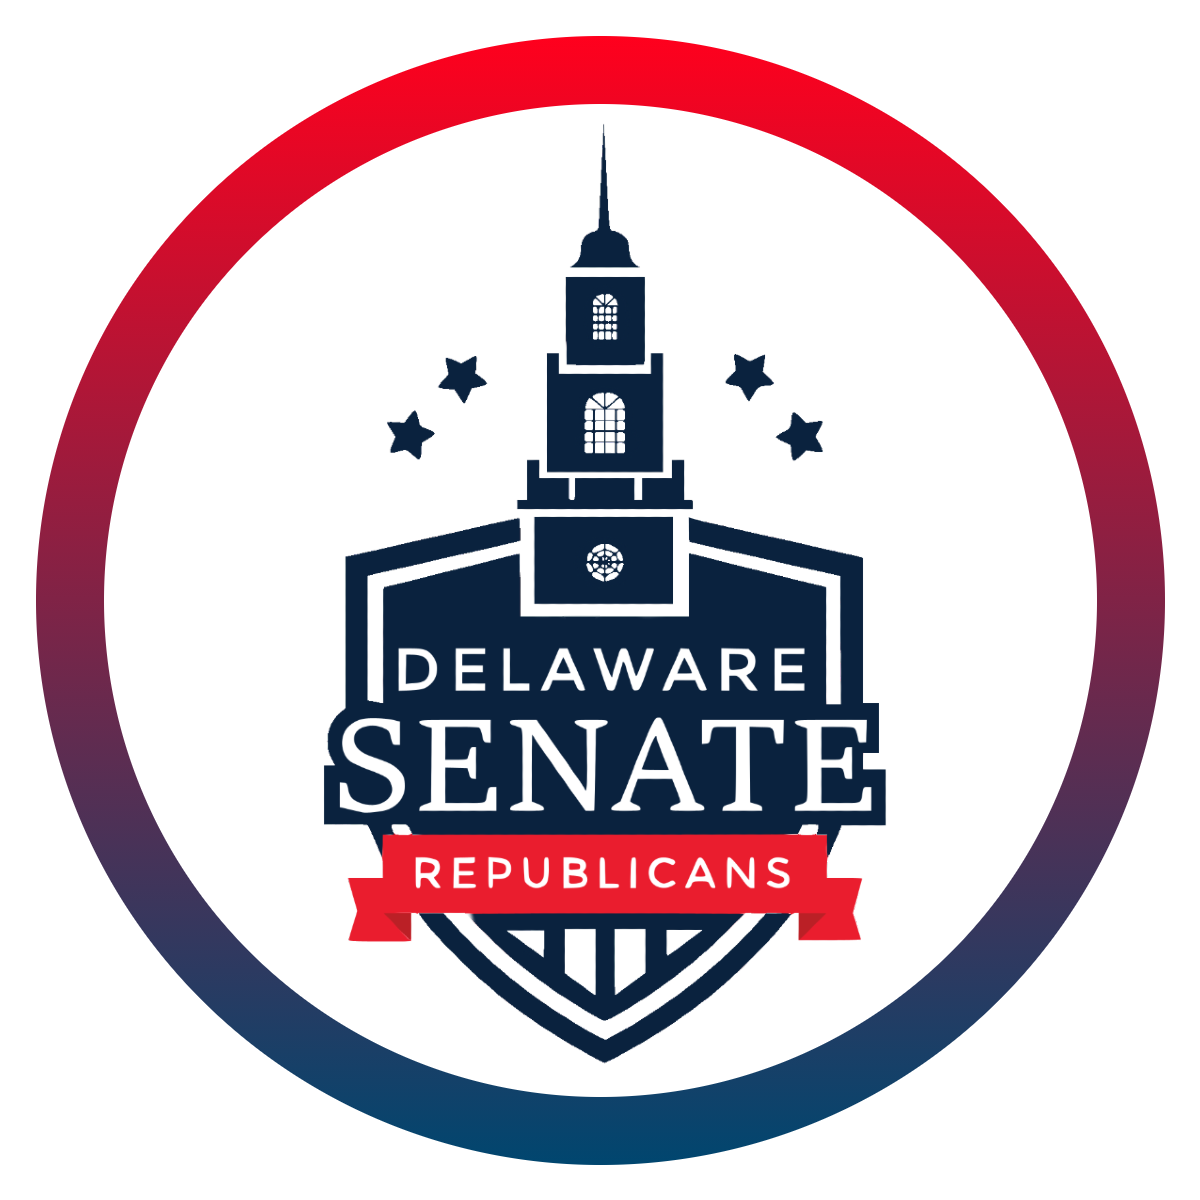 Delaware Senate logo